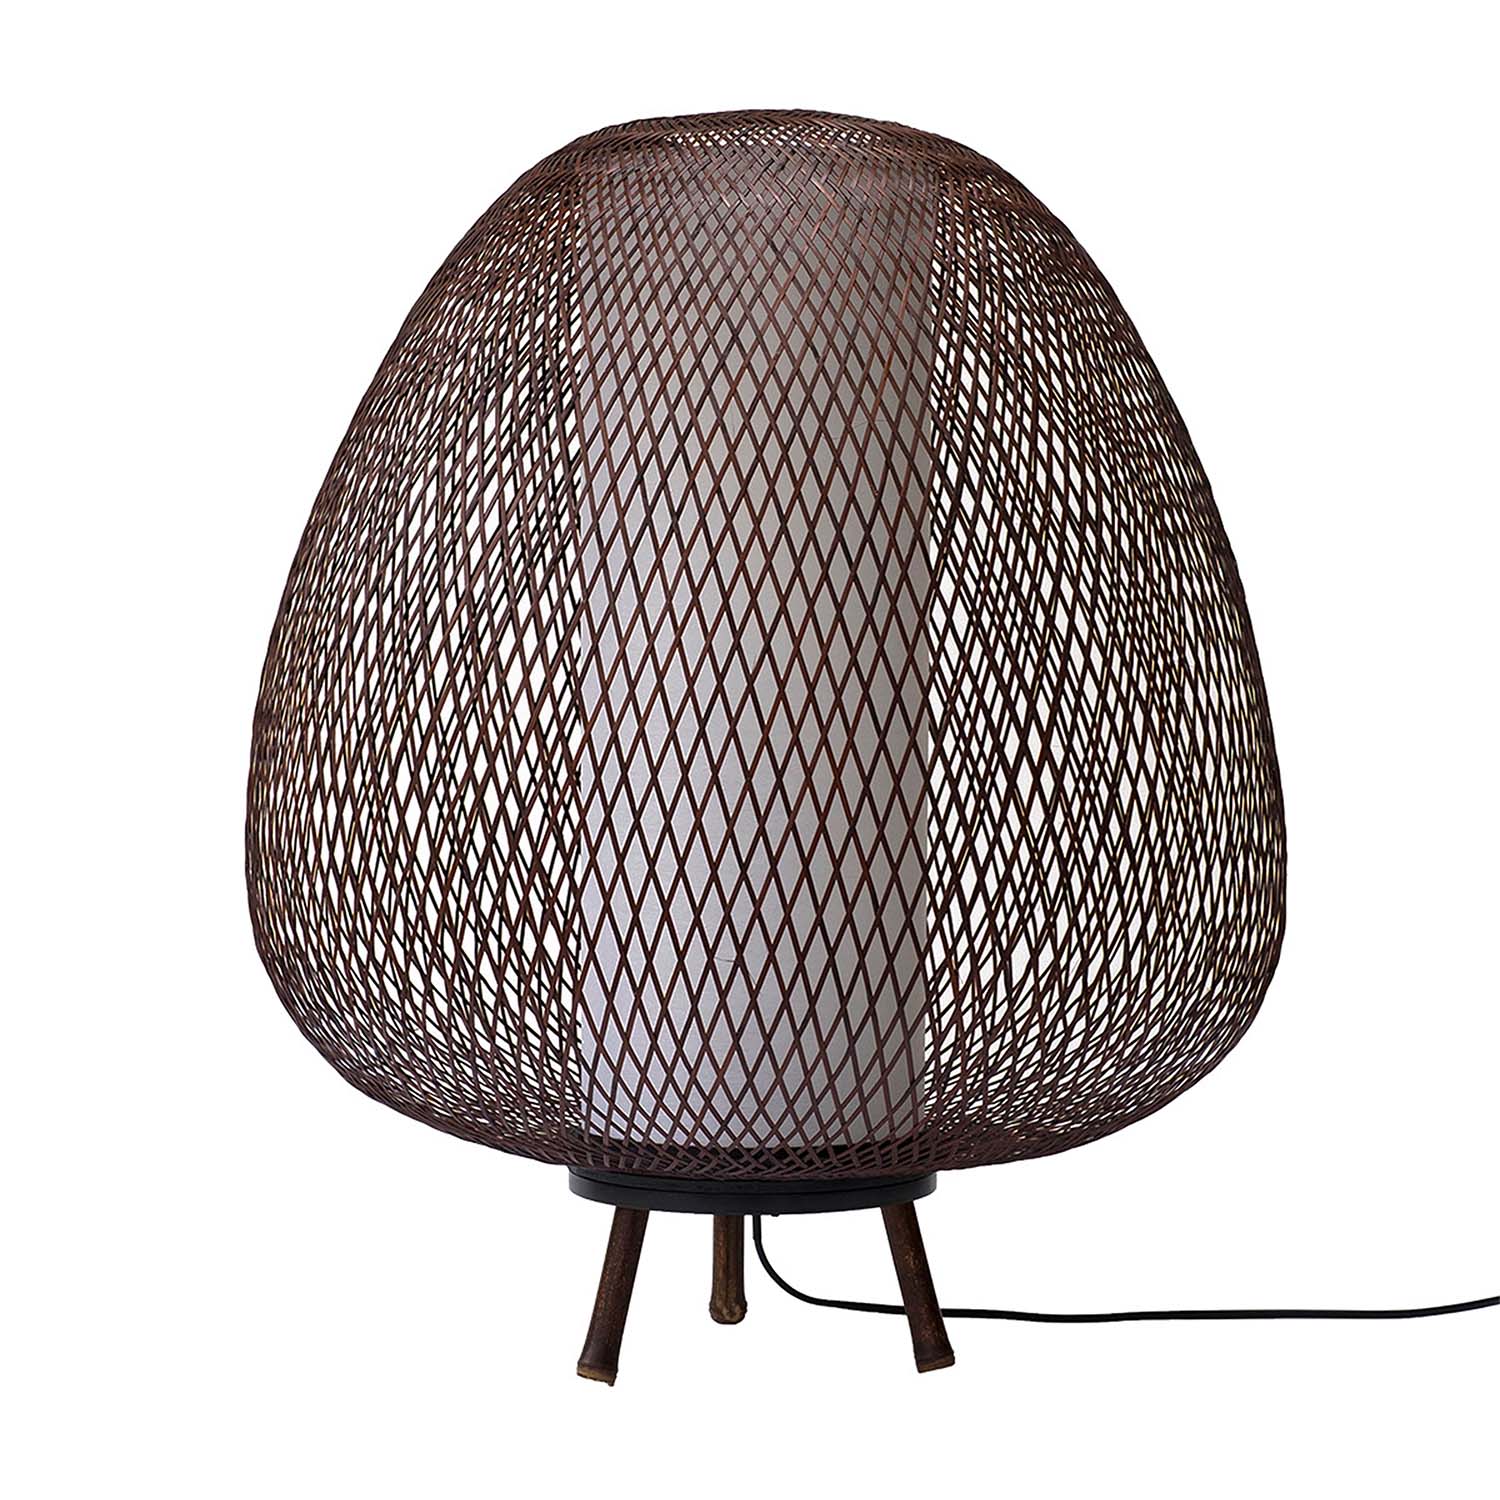 TWIGGY Floor - Egg-shaped floor lamp in woven bamboo